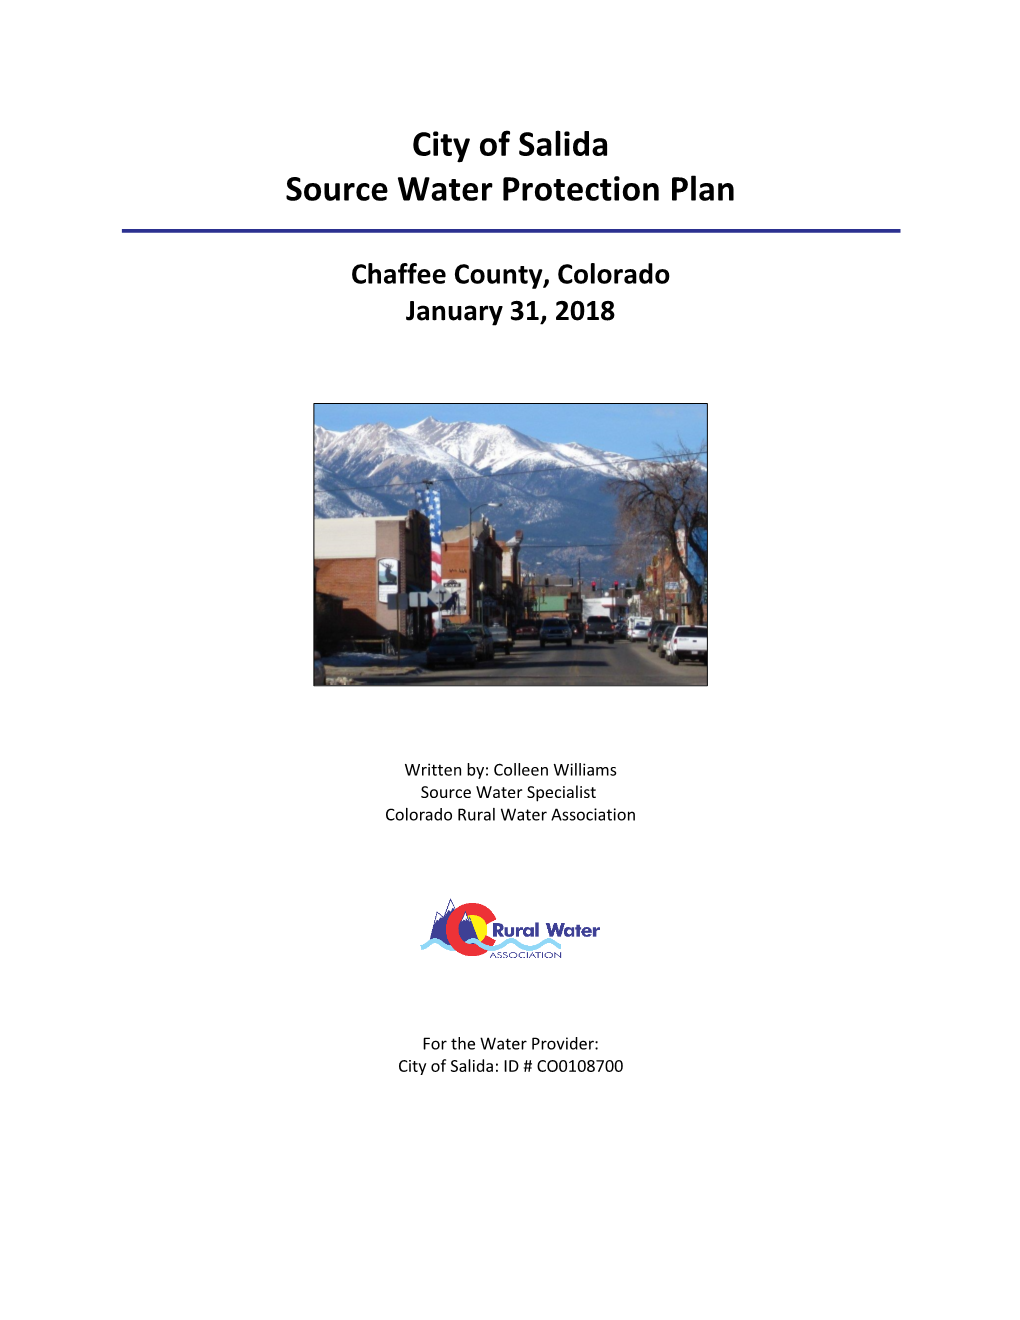 City of Salida Source Water Protection Plan